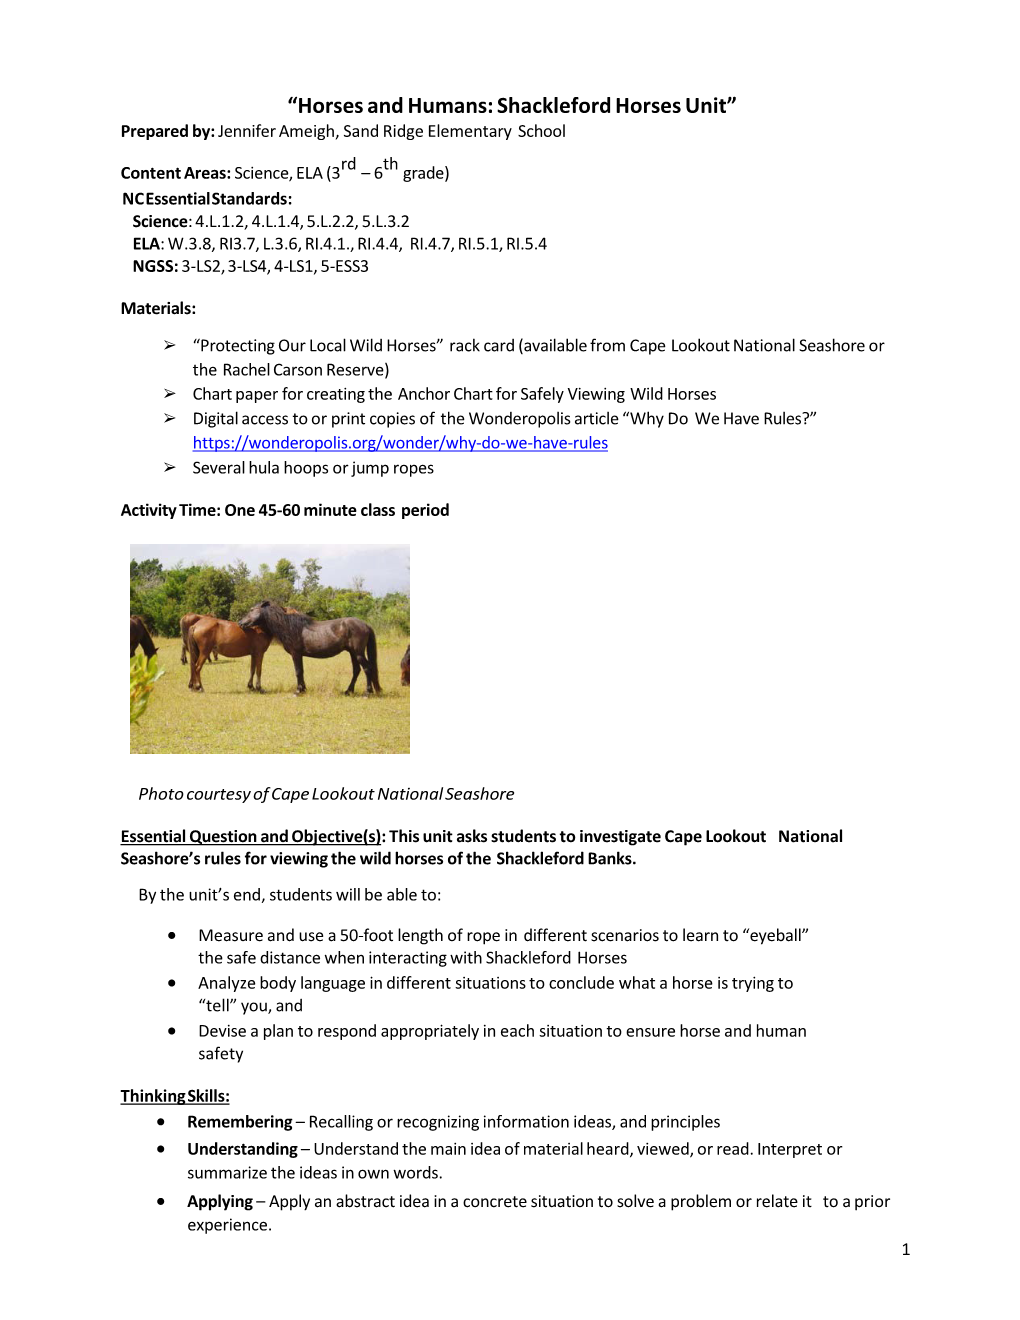 Shackleford Horses Unit” Prepared By: Jennifer Ameigh, Sand Ridge Elementary School